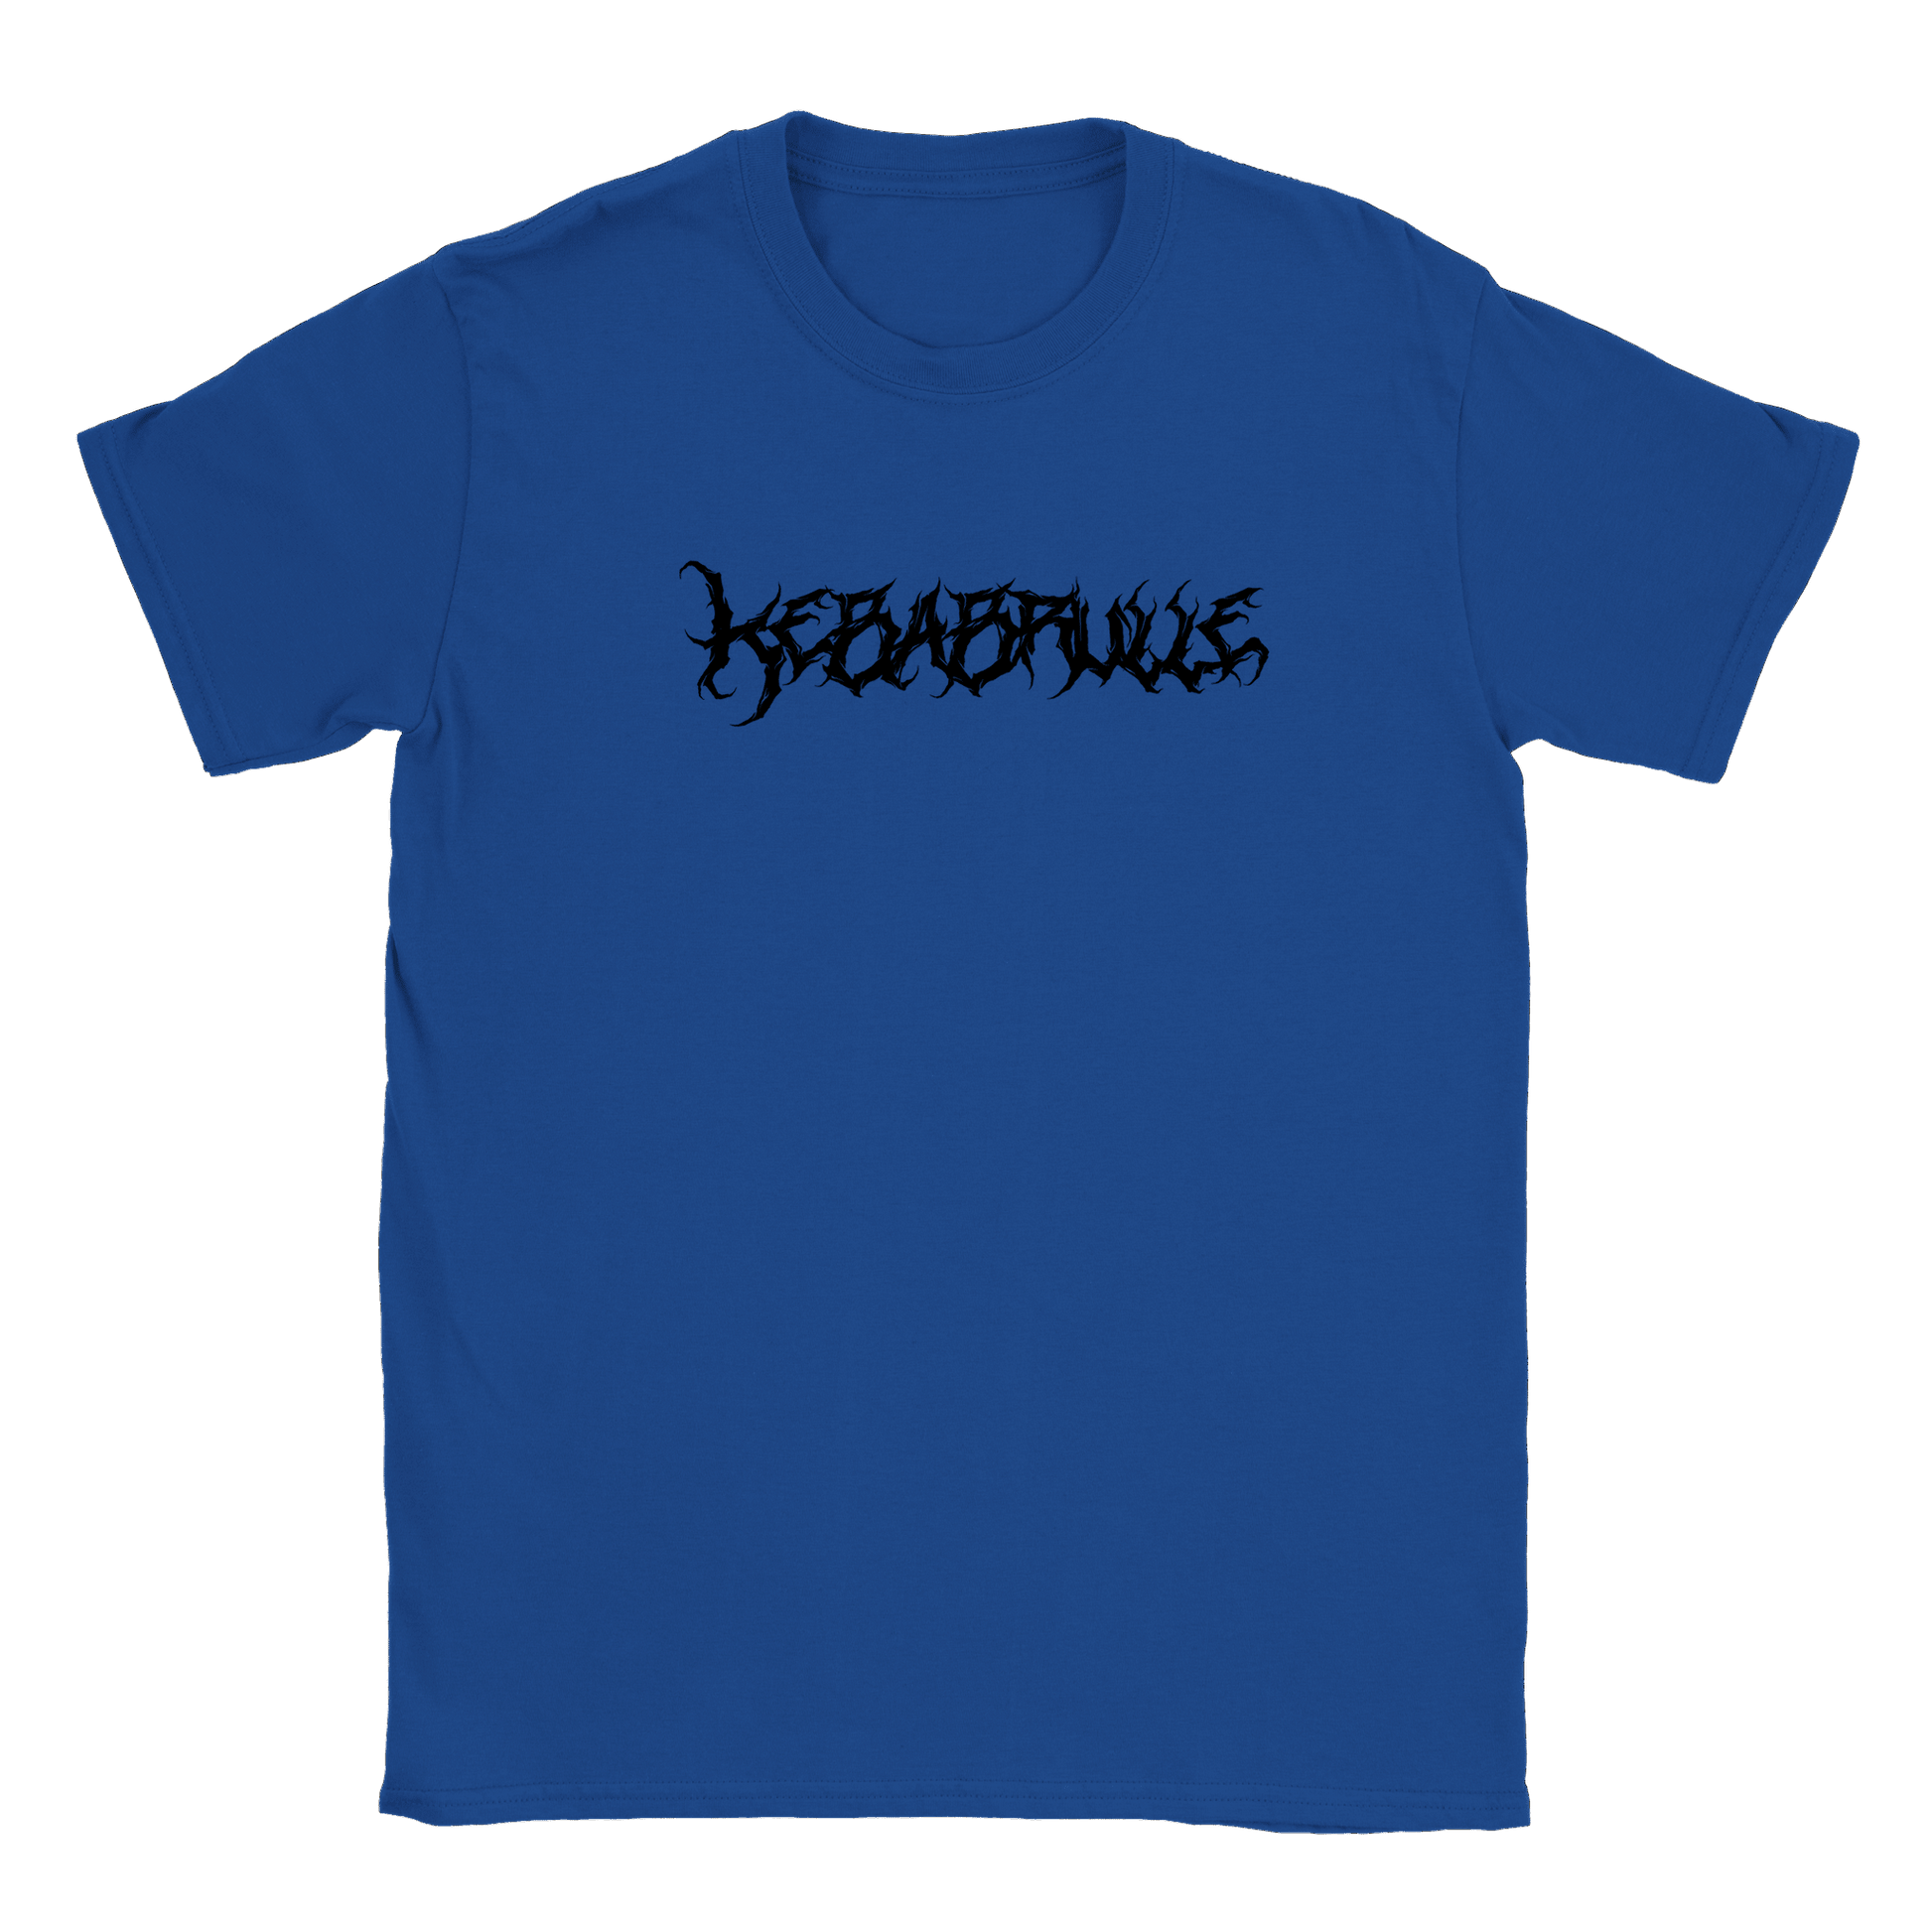 Kebabrulle - T-shirt Royal